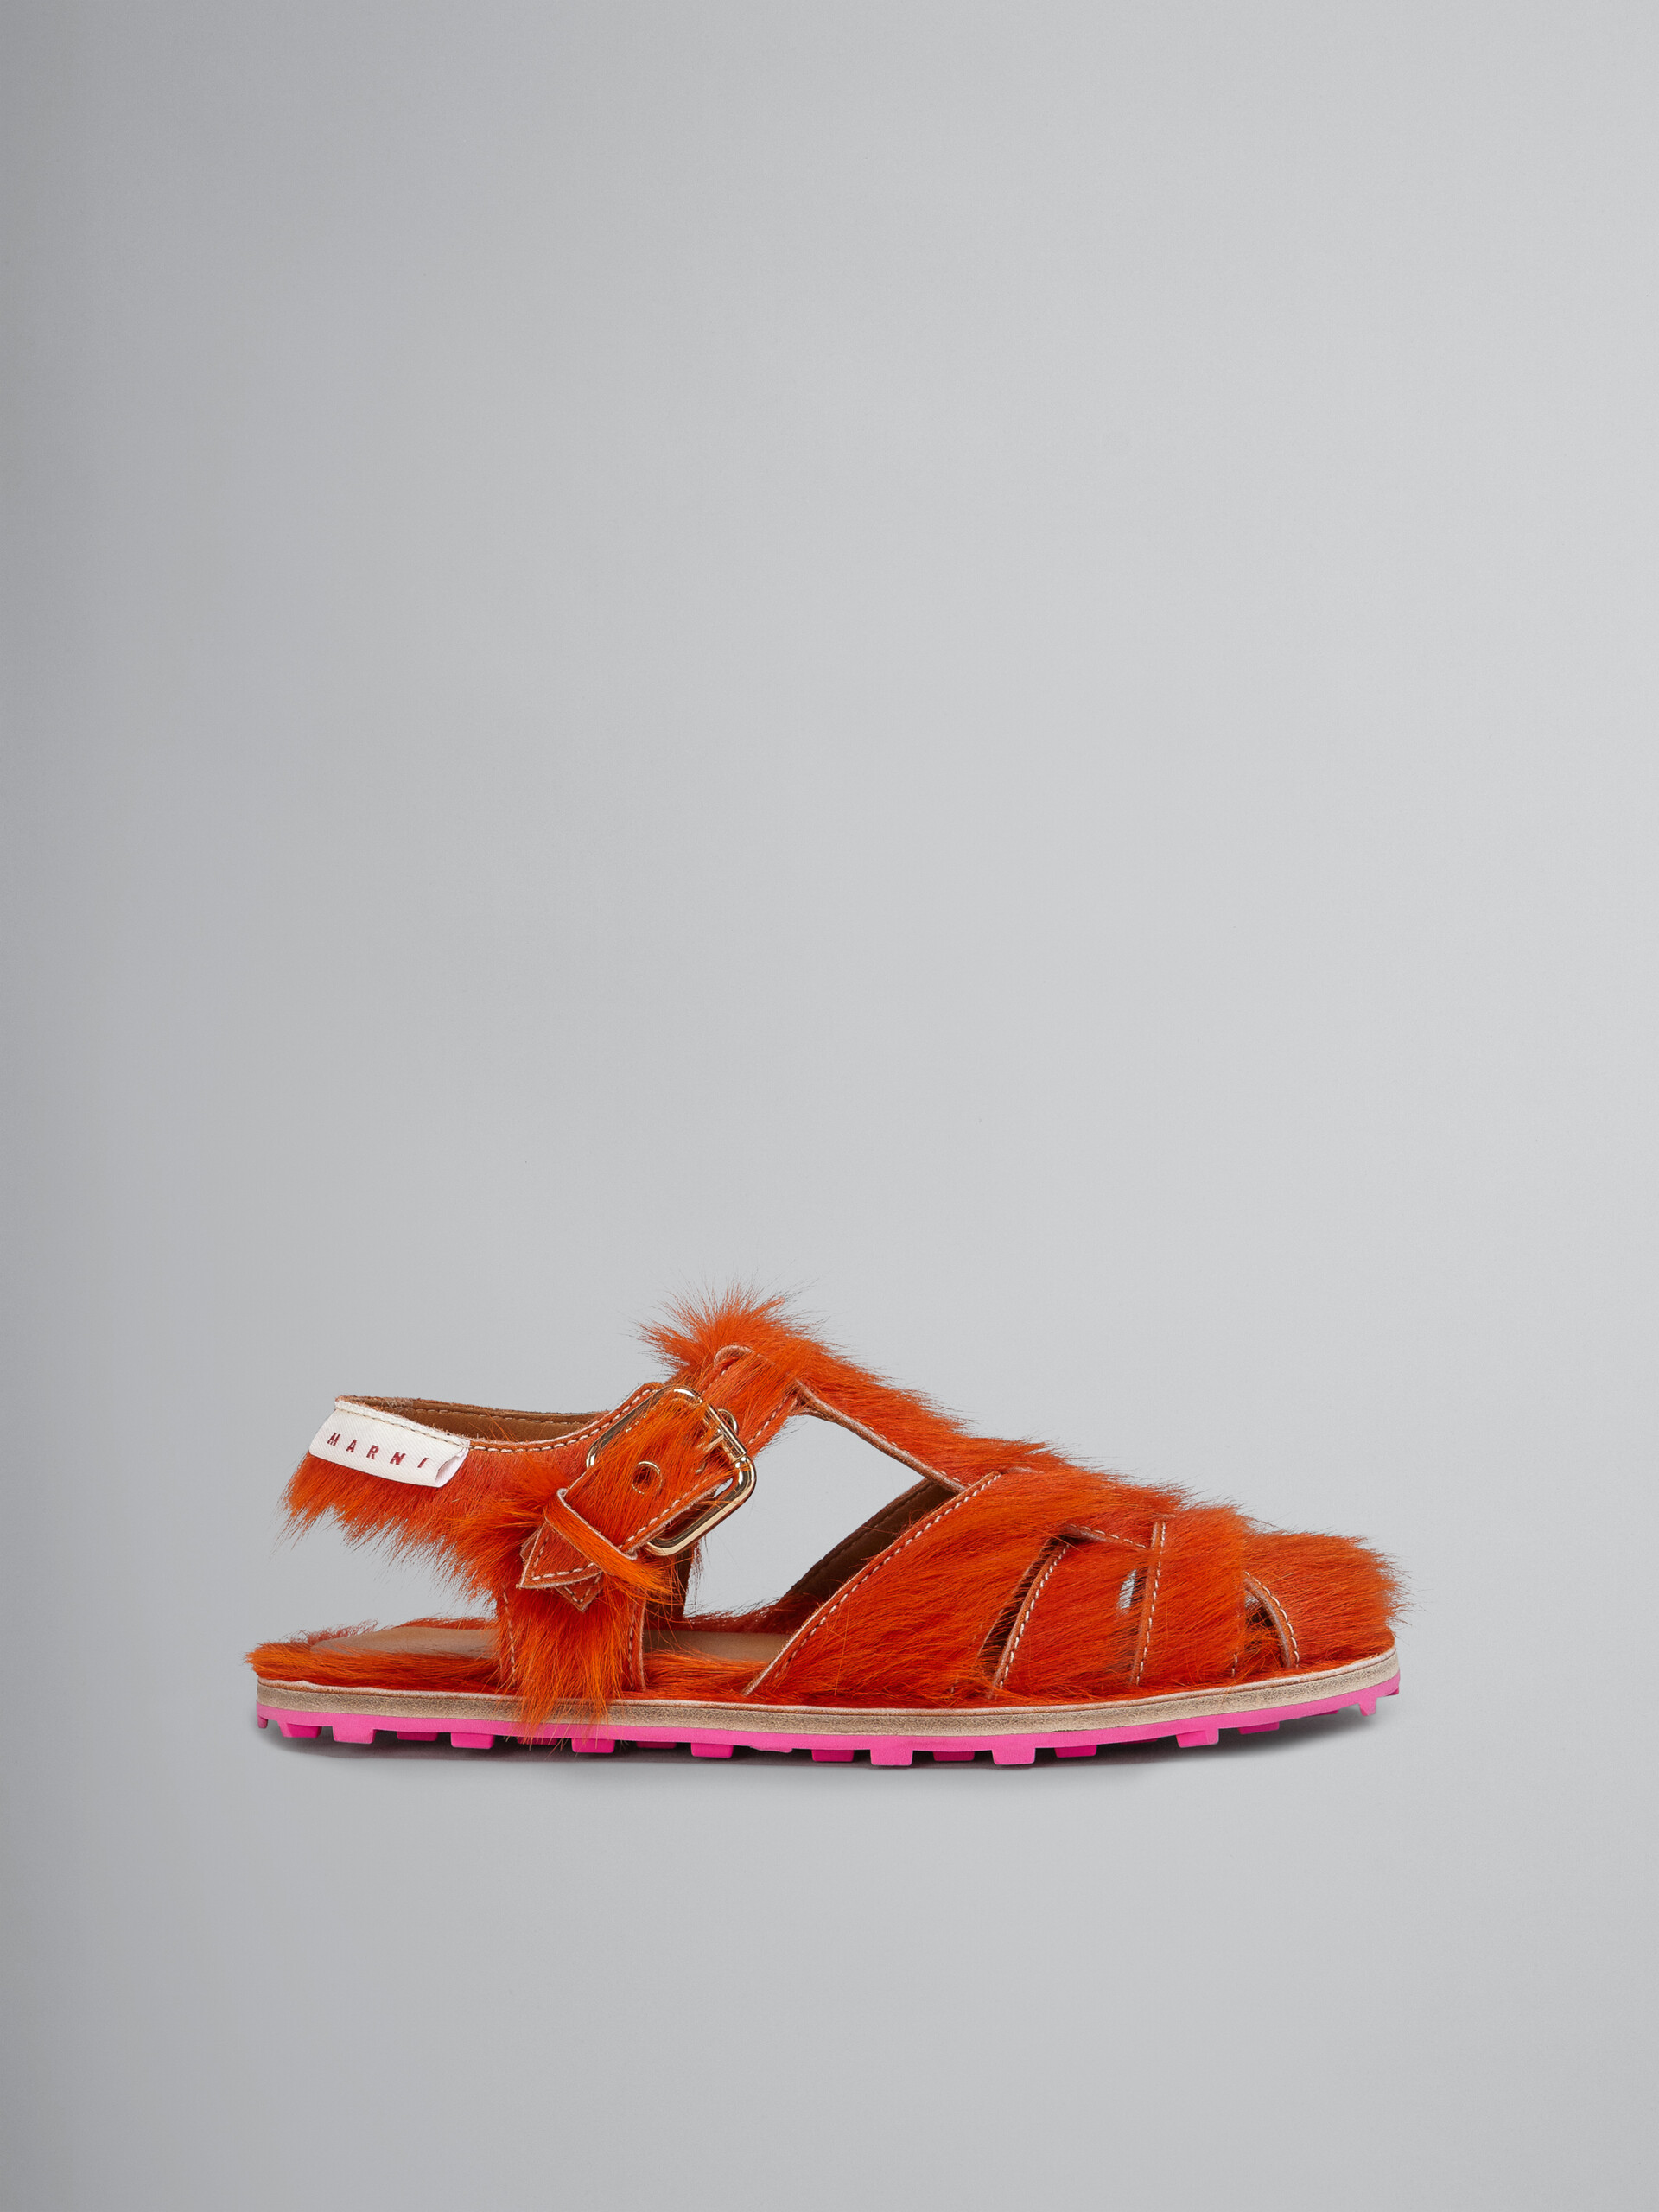 Long orange calf hair Fisherman's sandal - Sandals - Image 1